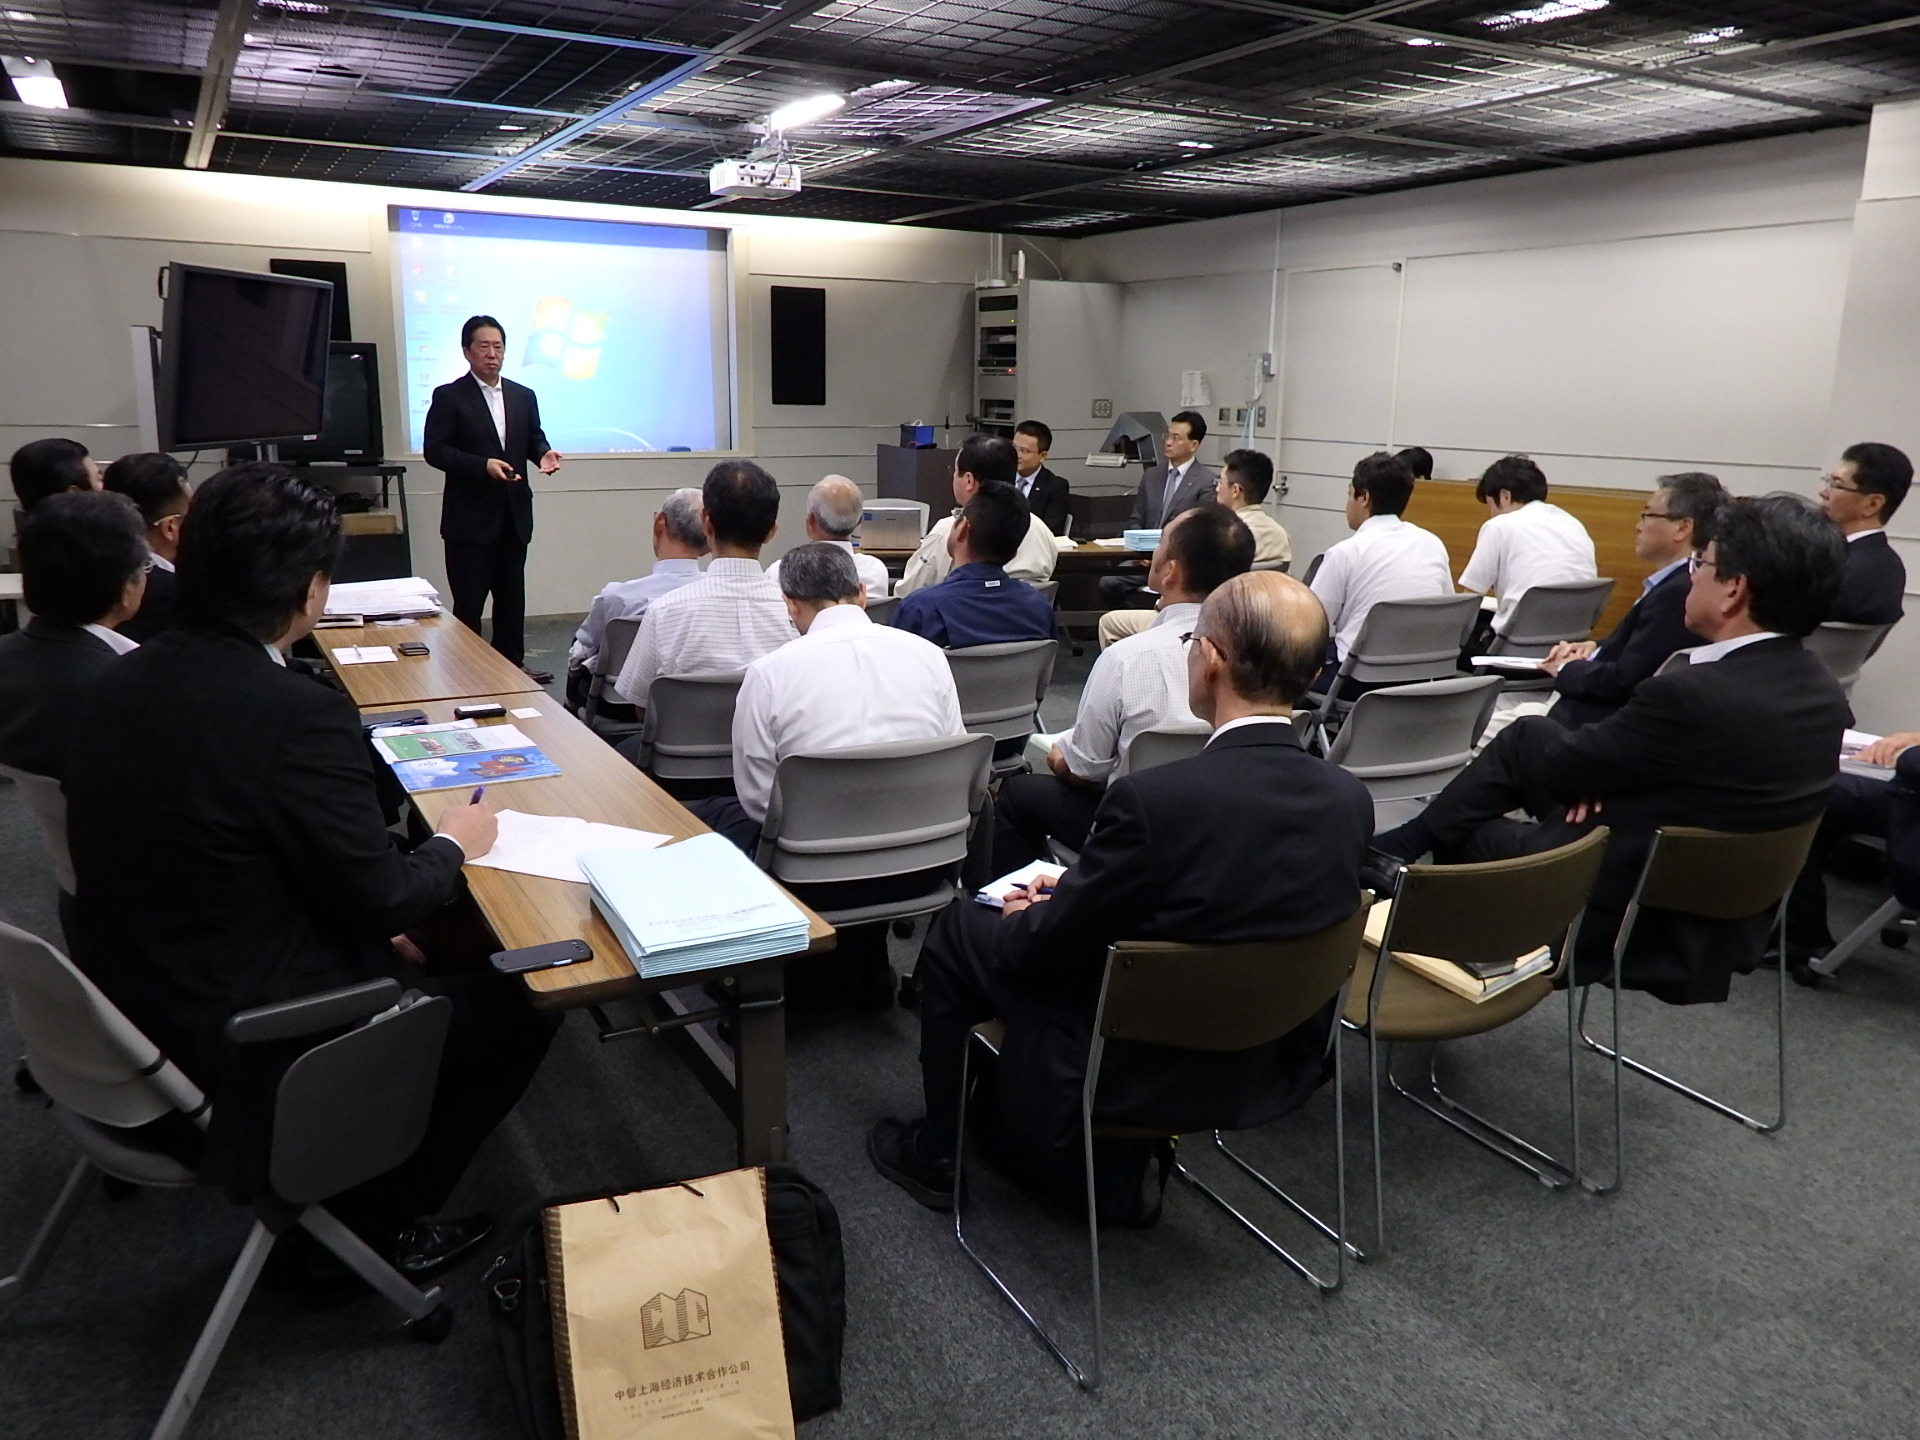 NIBELC delivered the presentation of technical intern training program in Japan